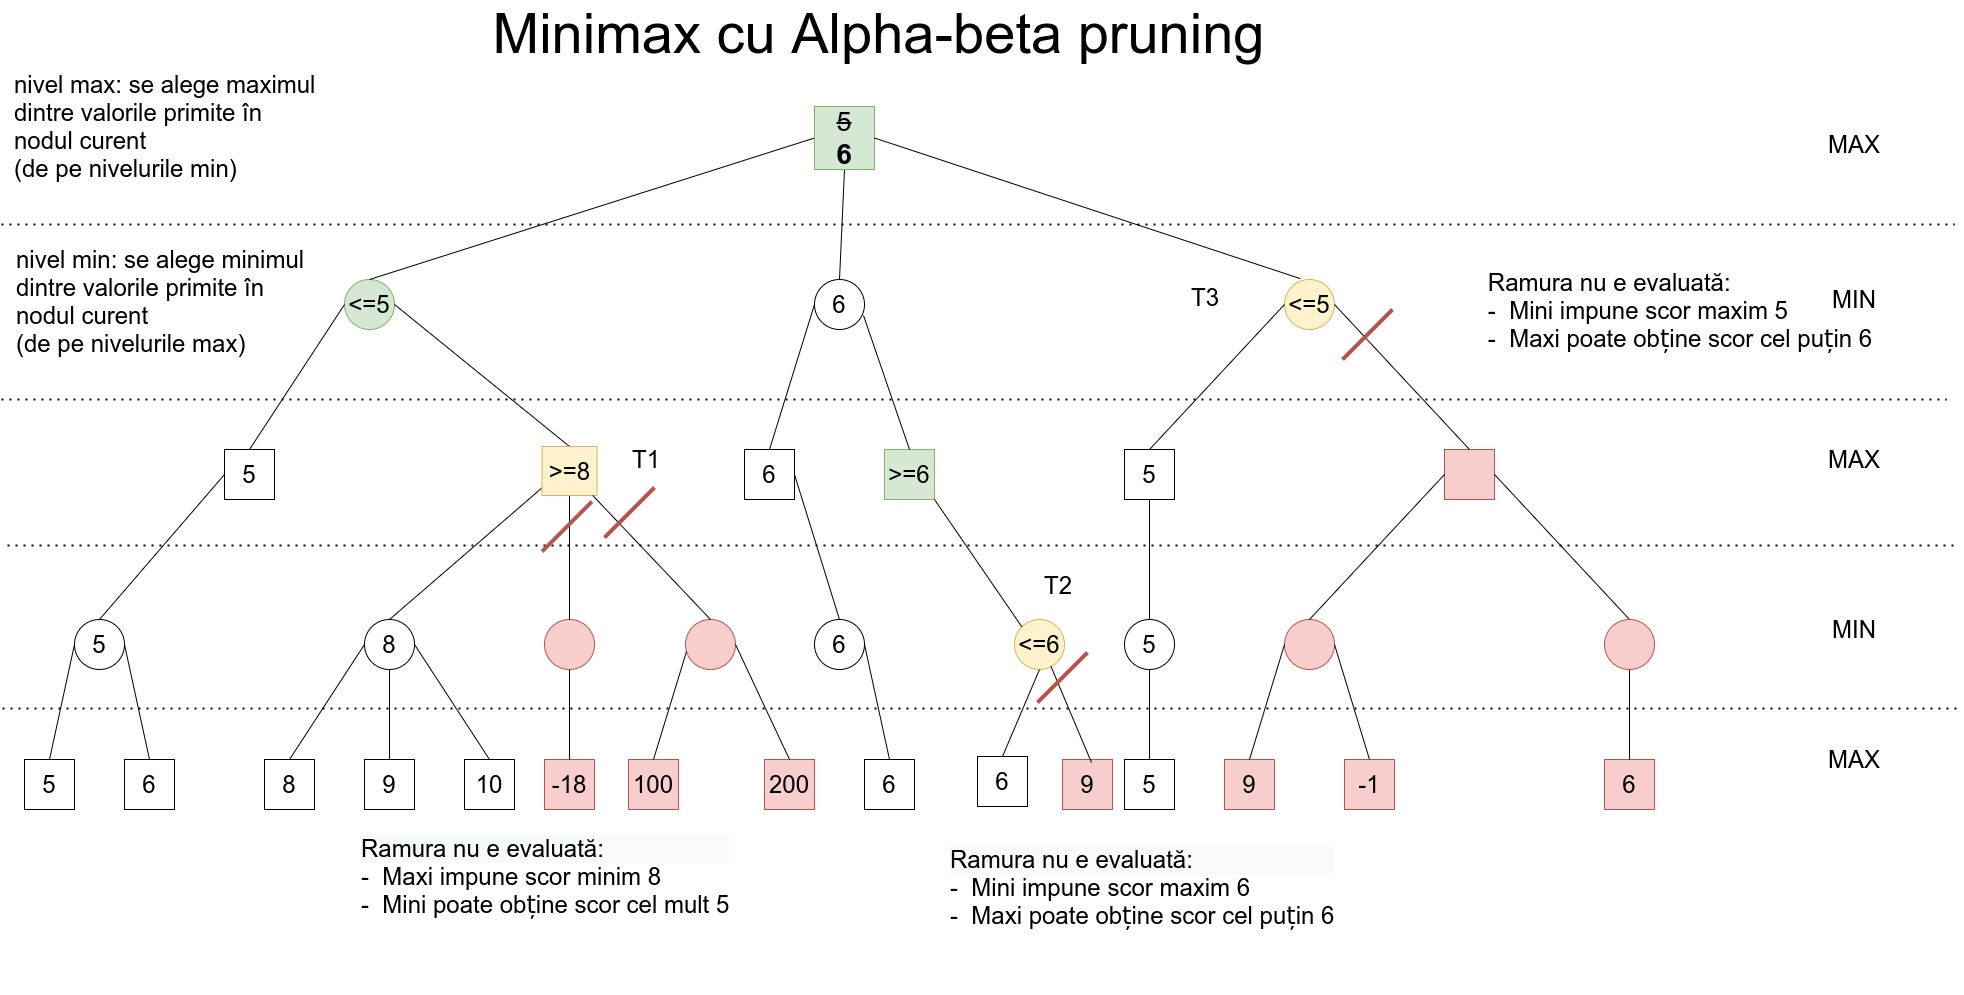 minimax_alphabeta.jpg